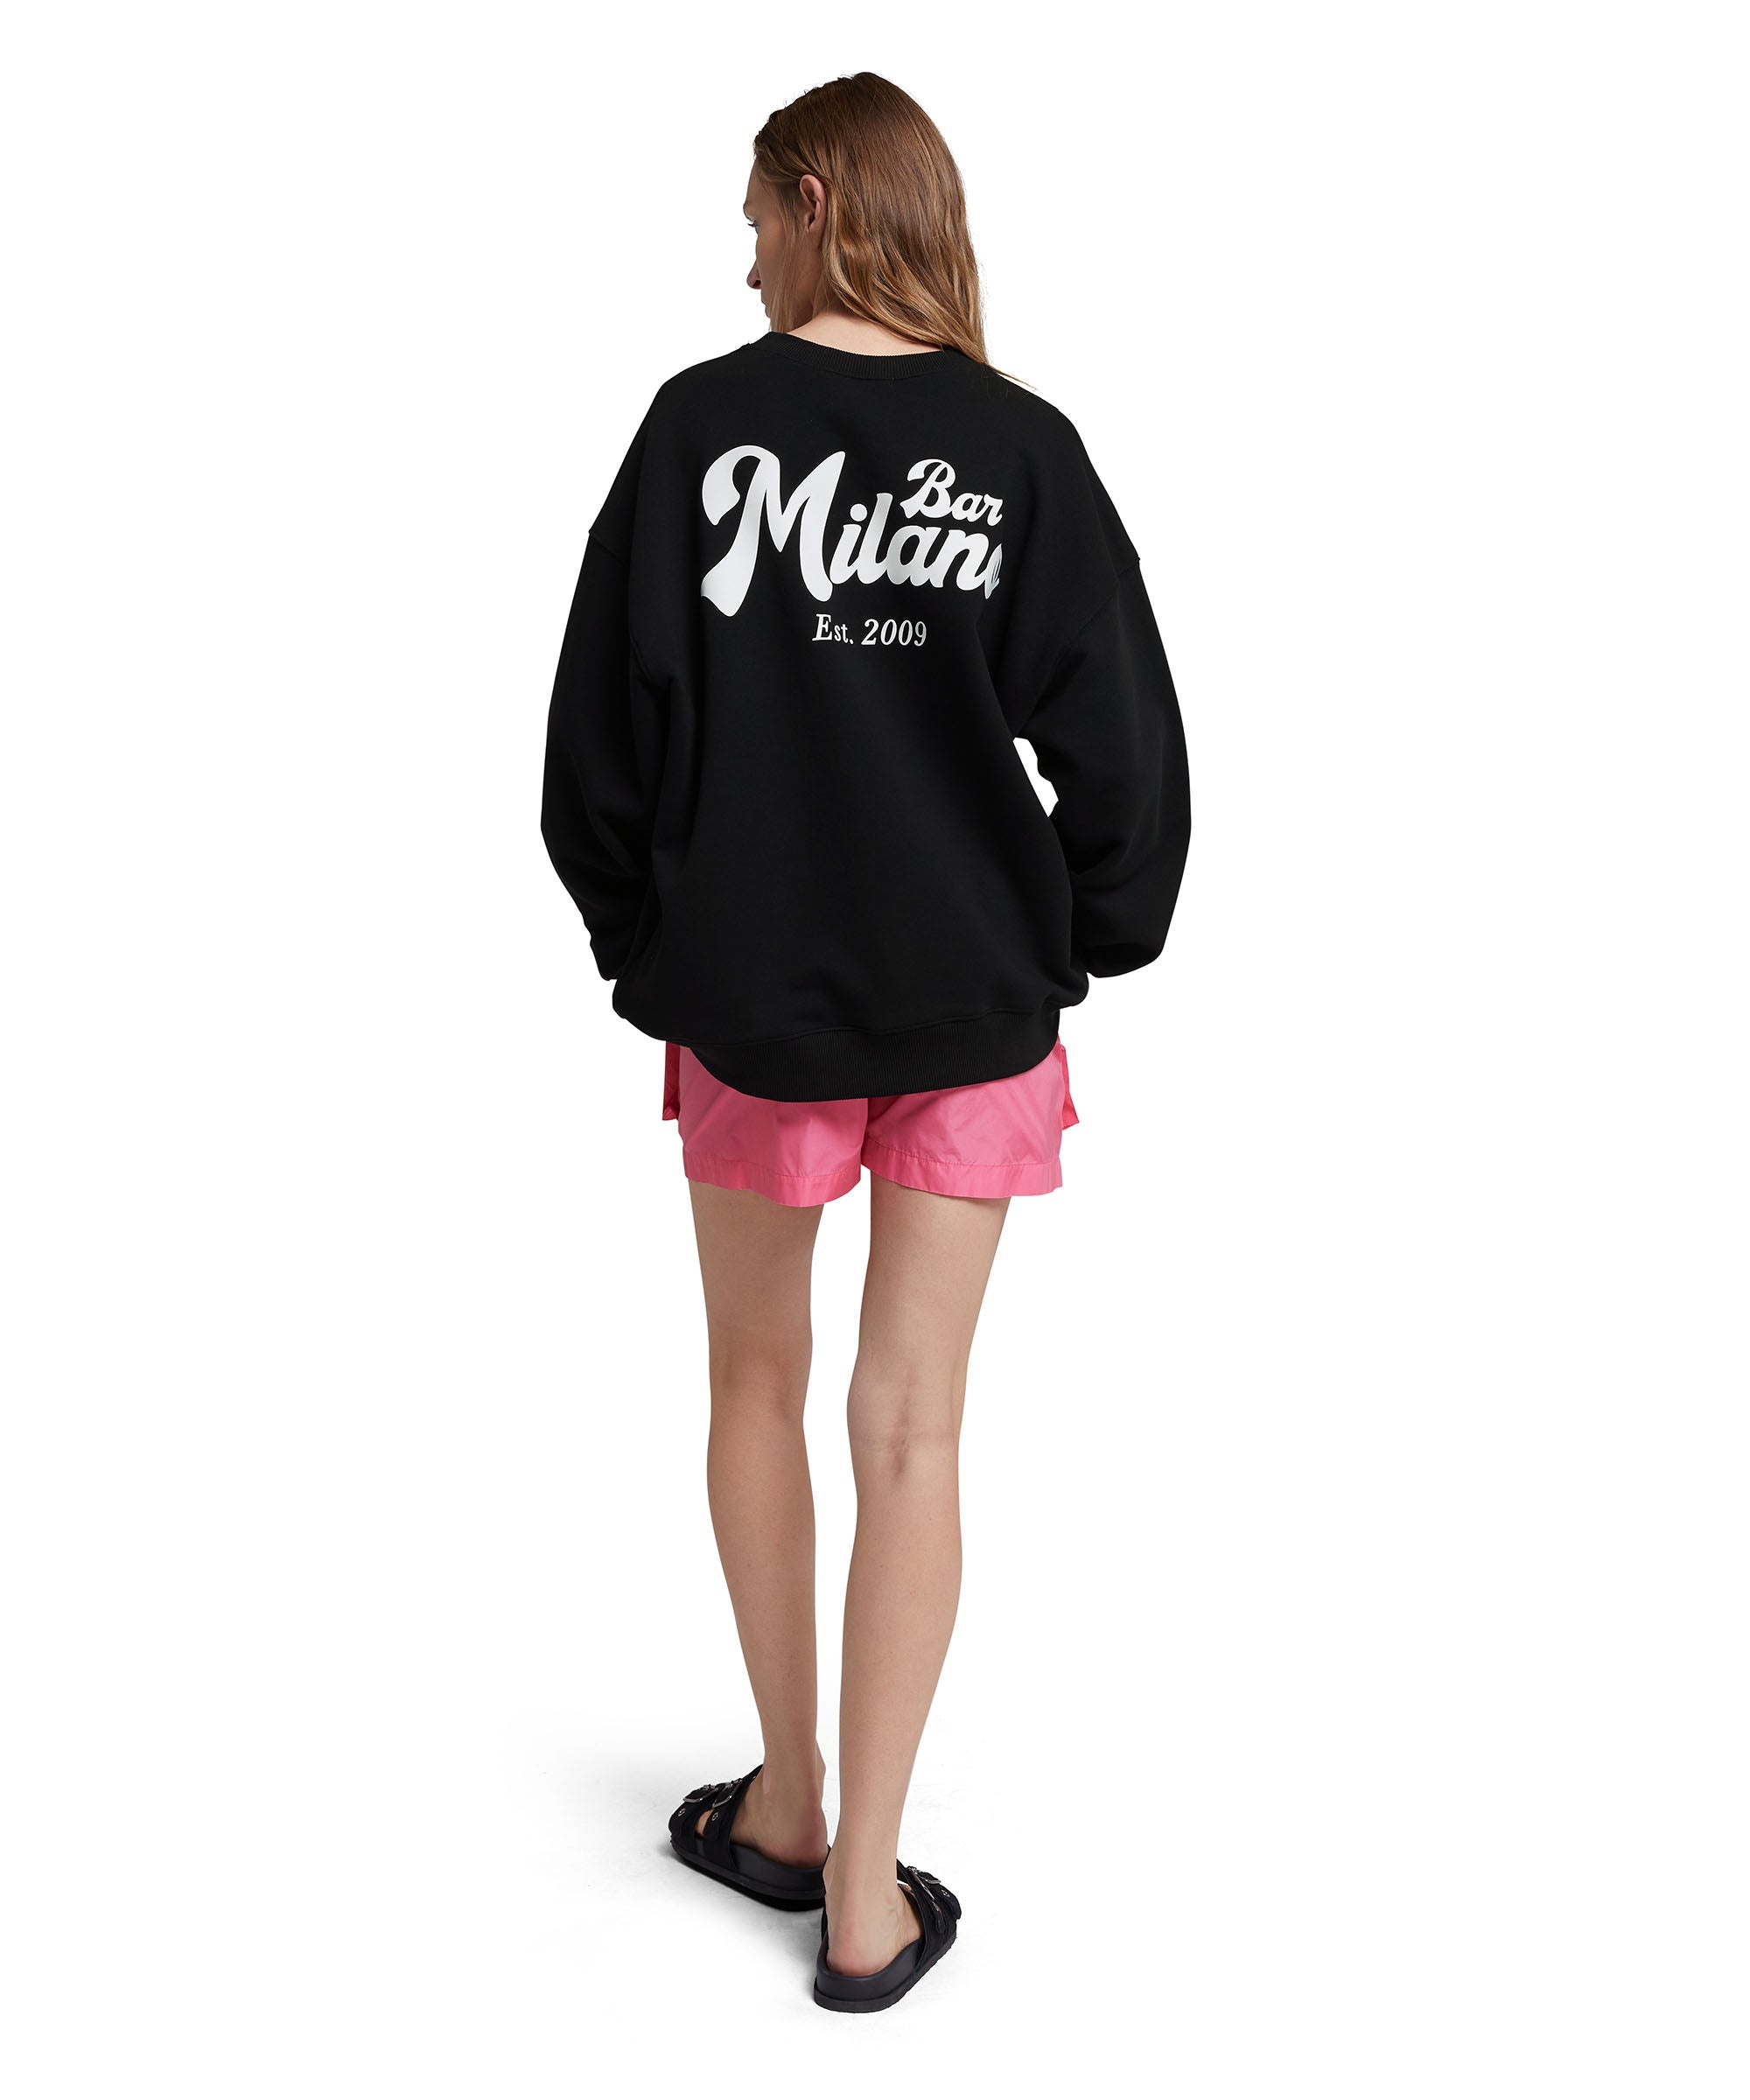 Sweatshirt with "bar Milano" graphic - 5